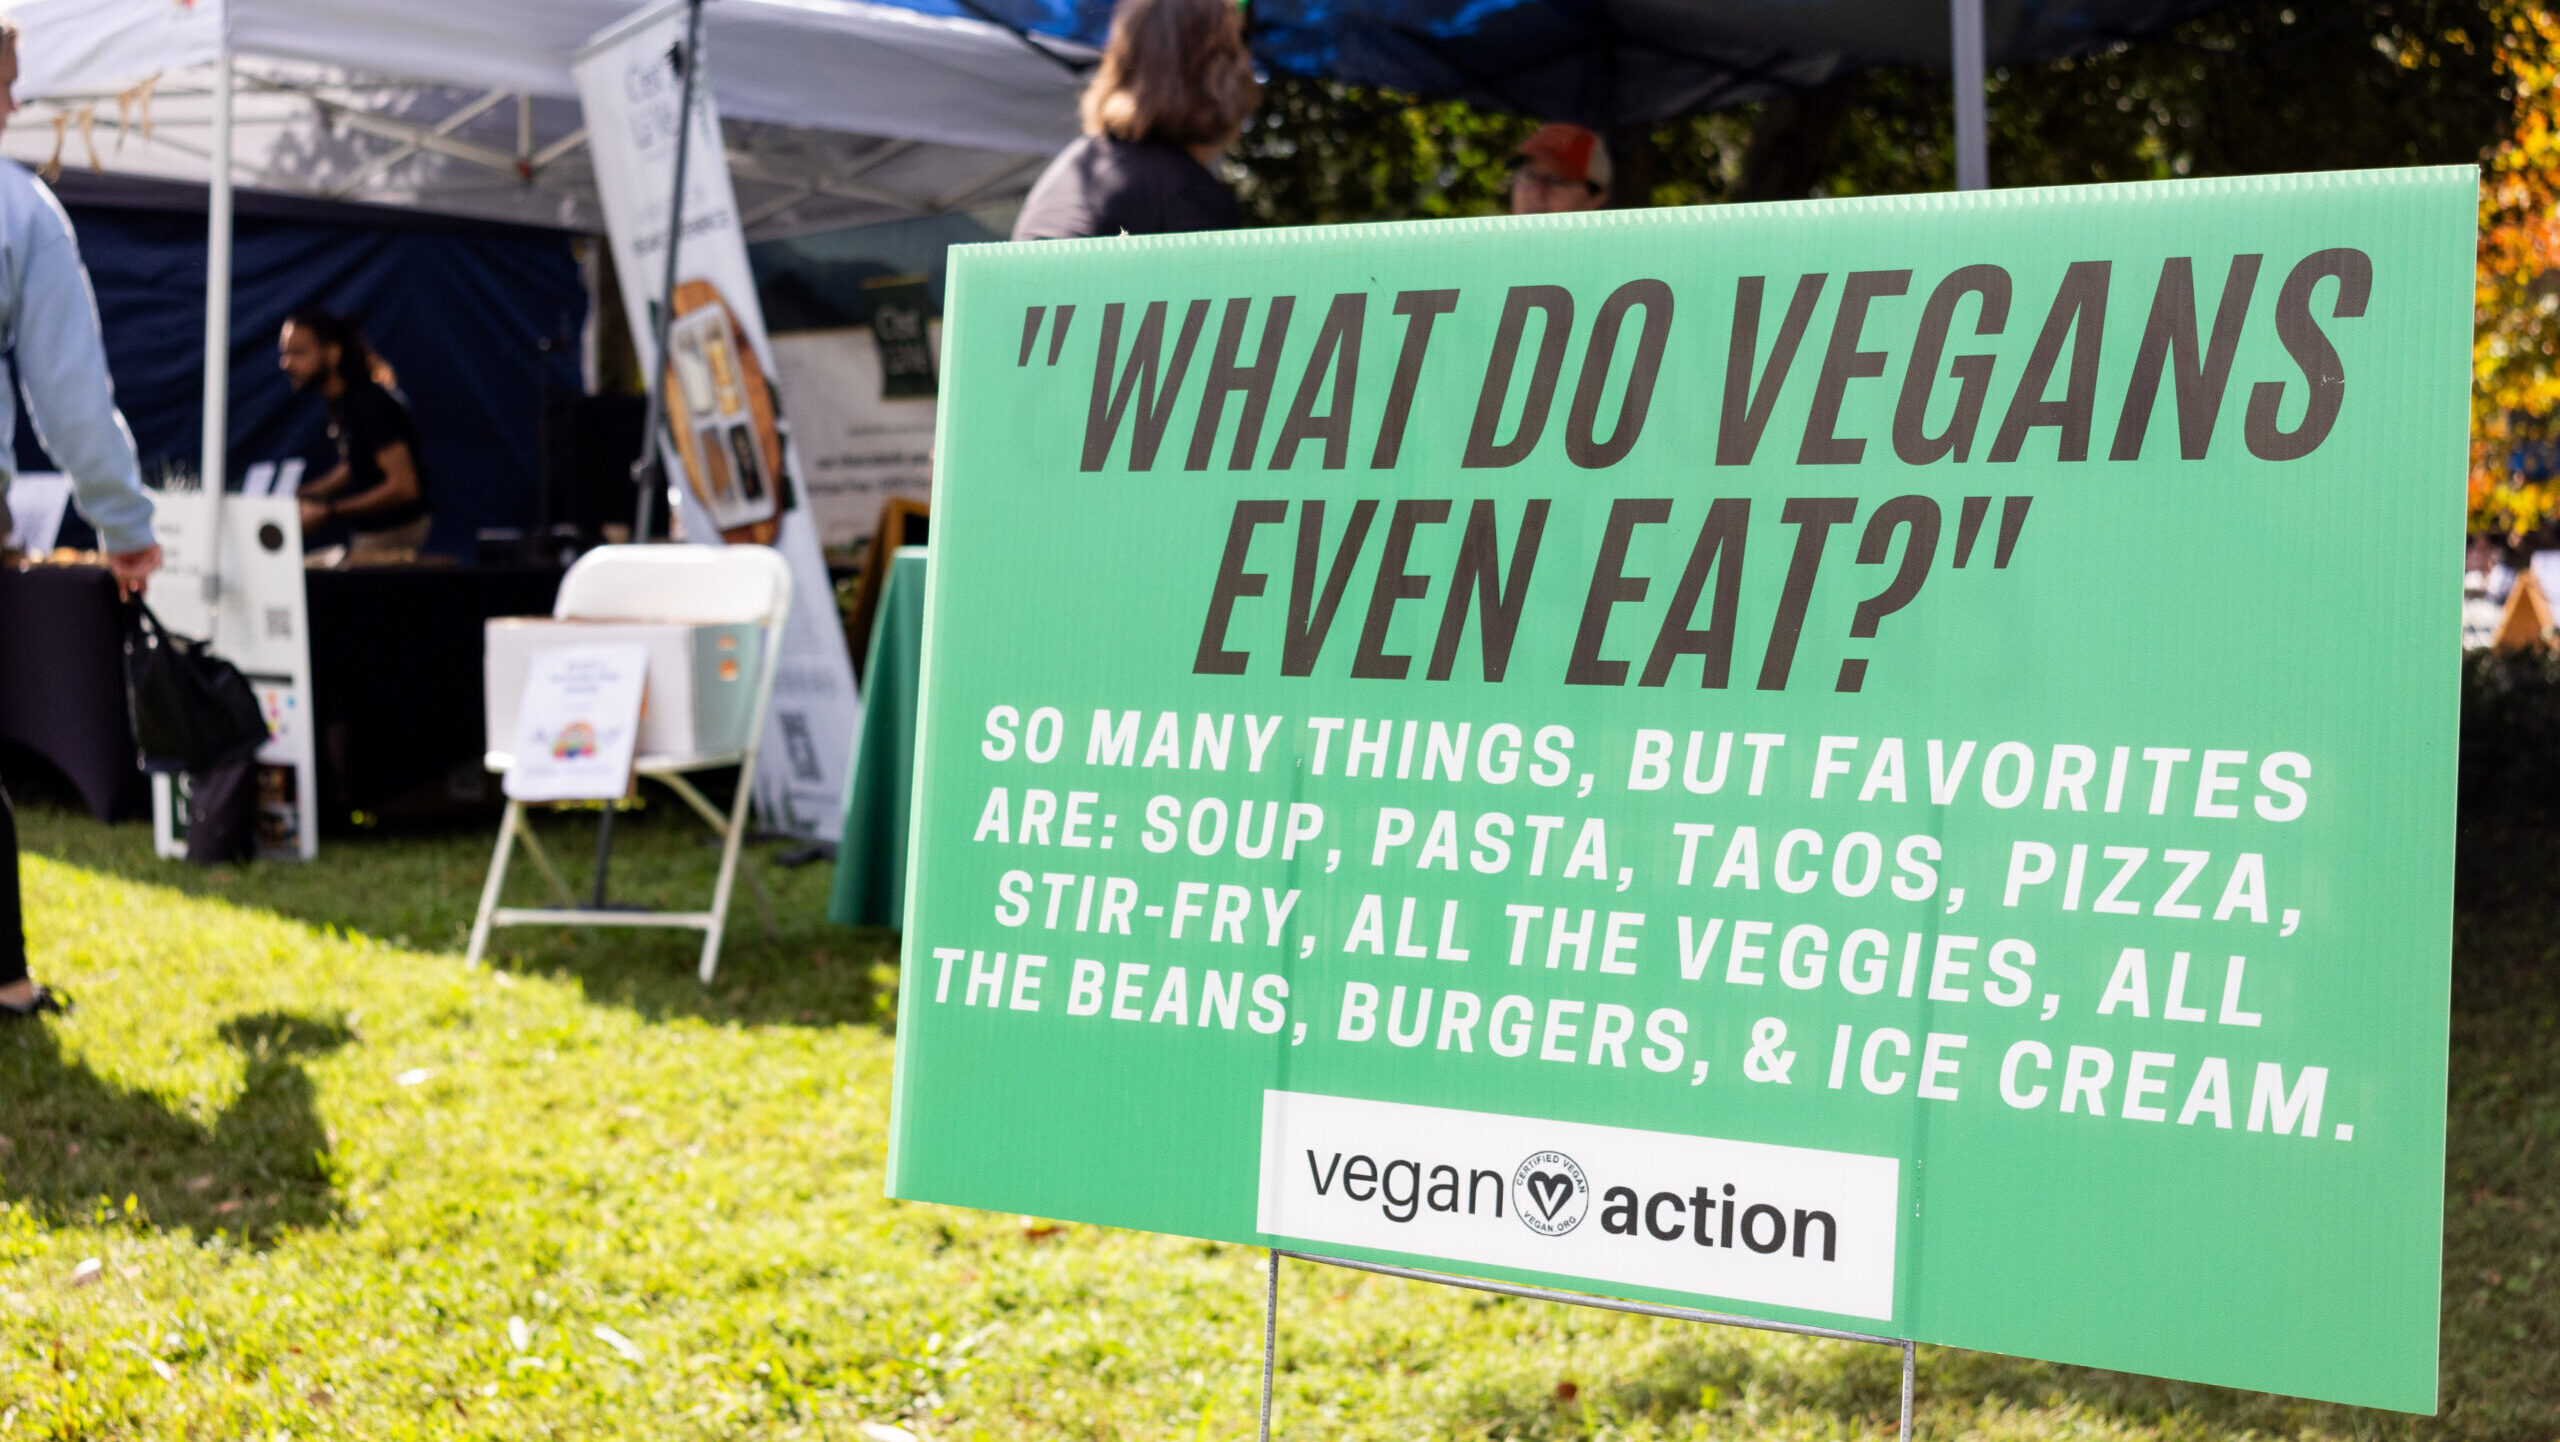 Vegan action